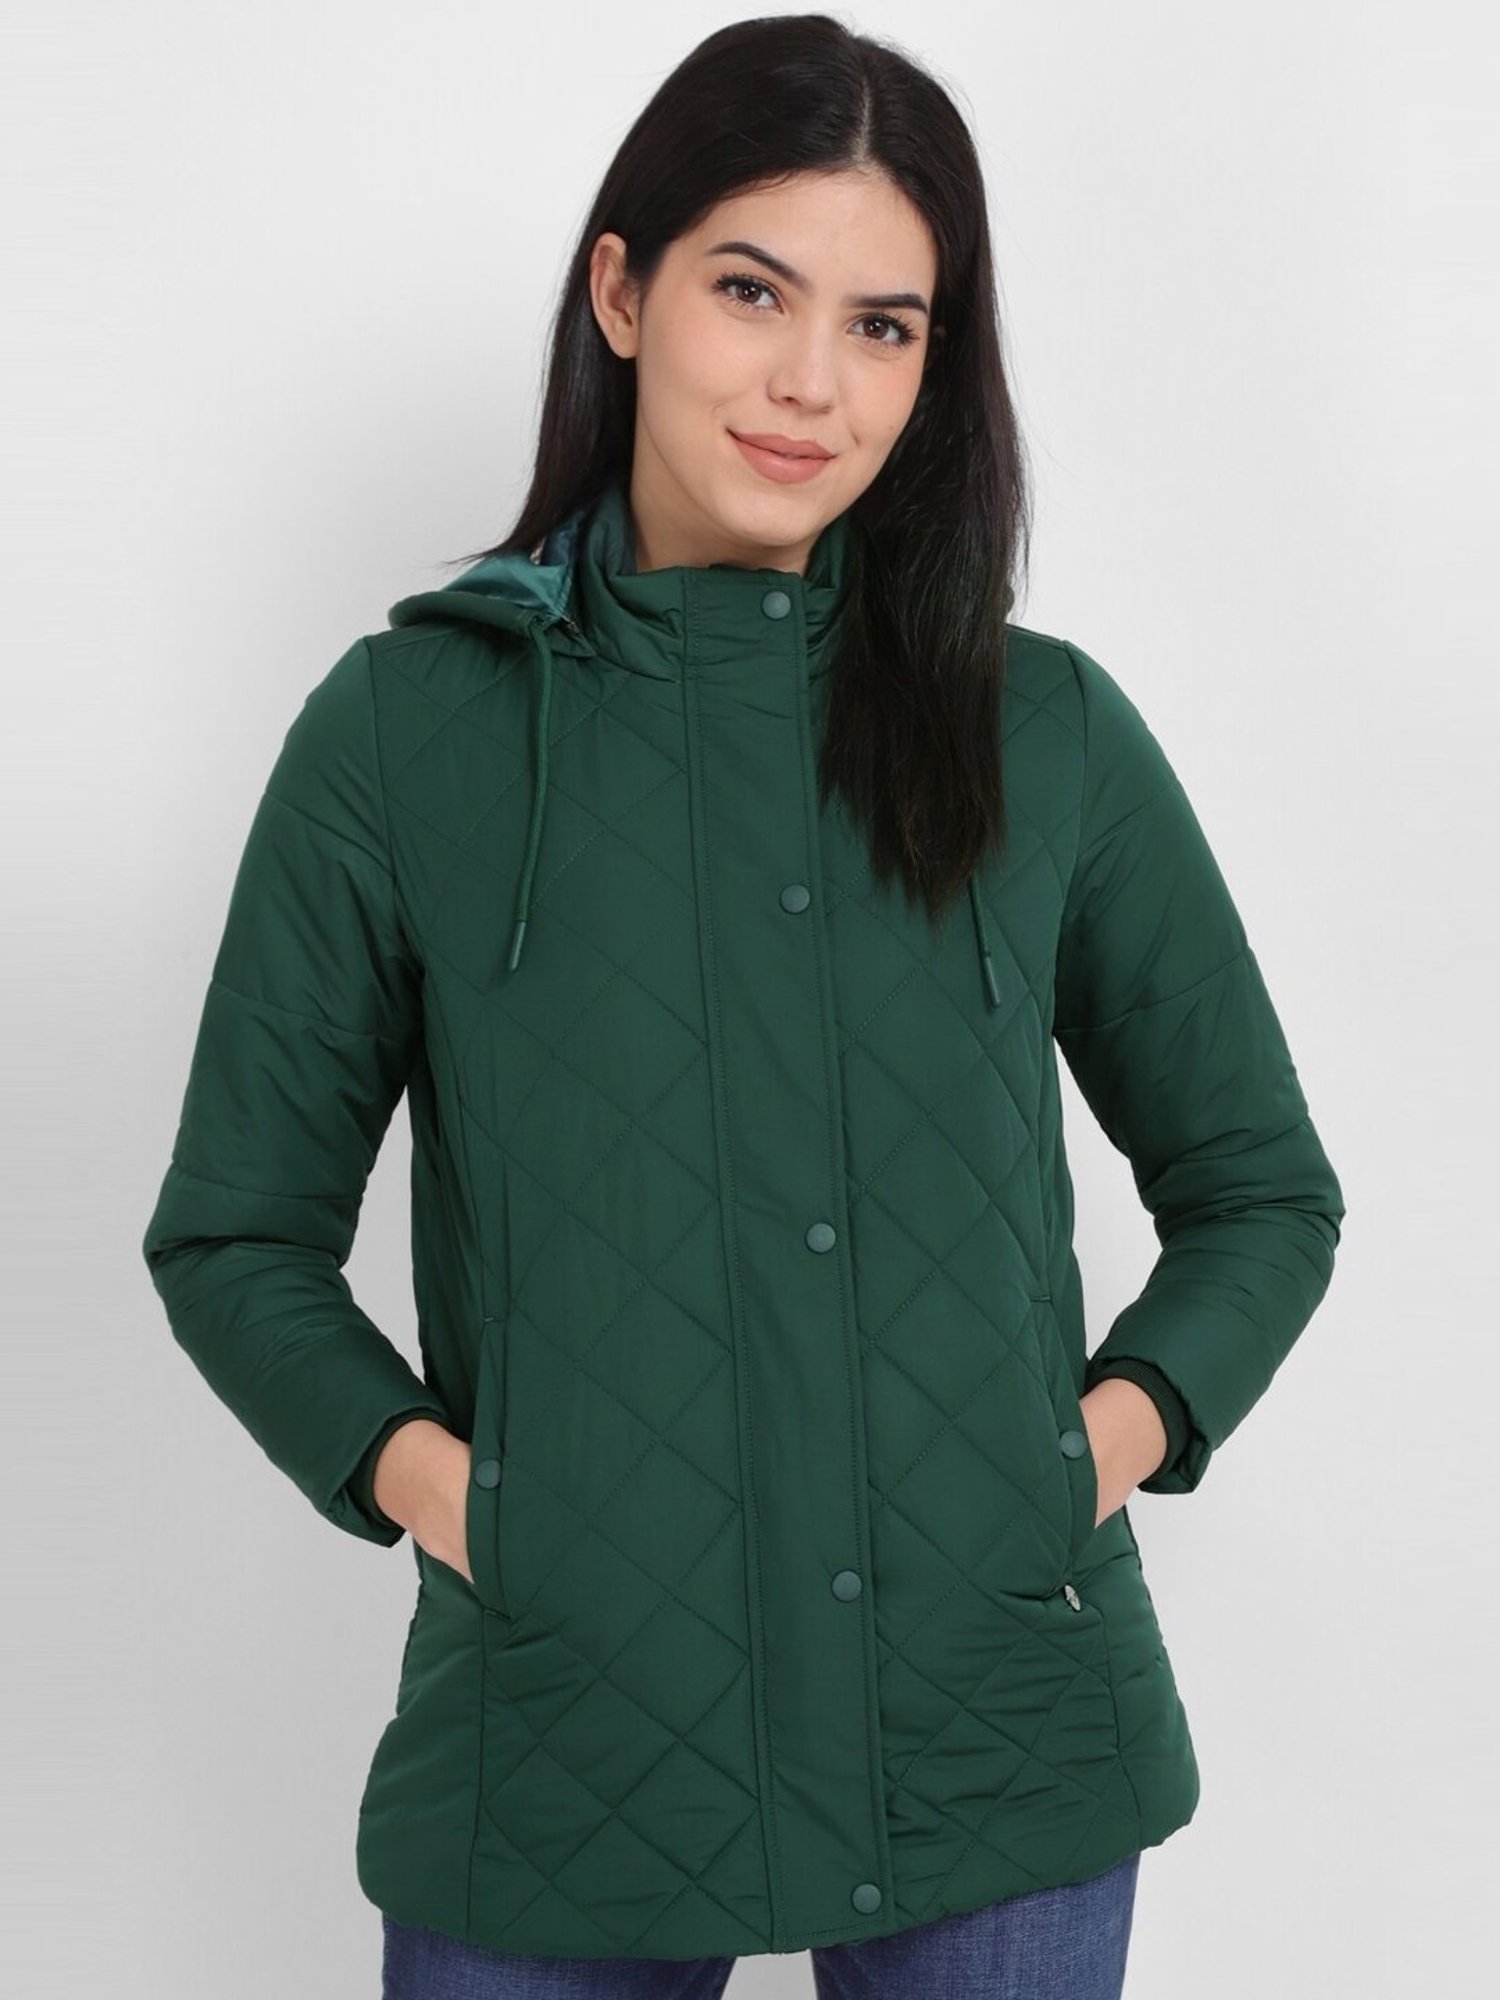 Buy Allen Solly Women's Parka Coat (AHJKCRGFH66046_Green_XS) at Amazon.in